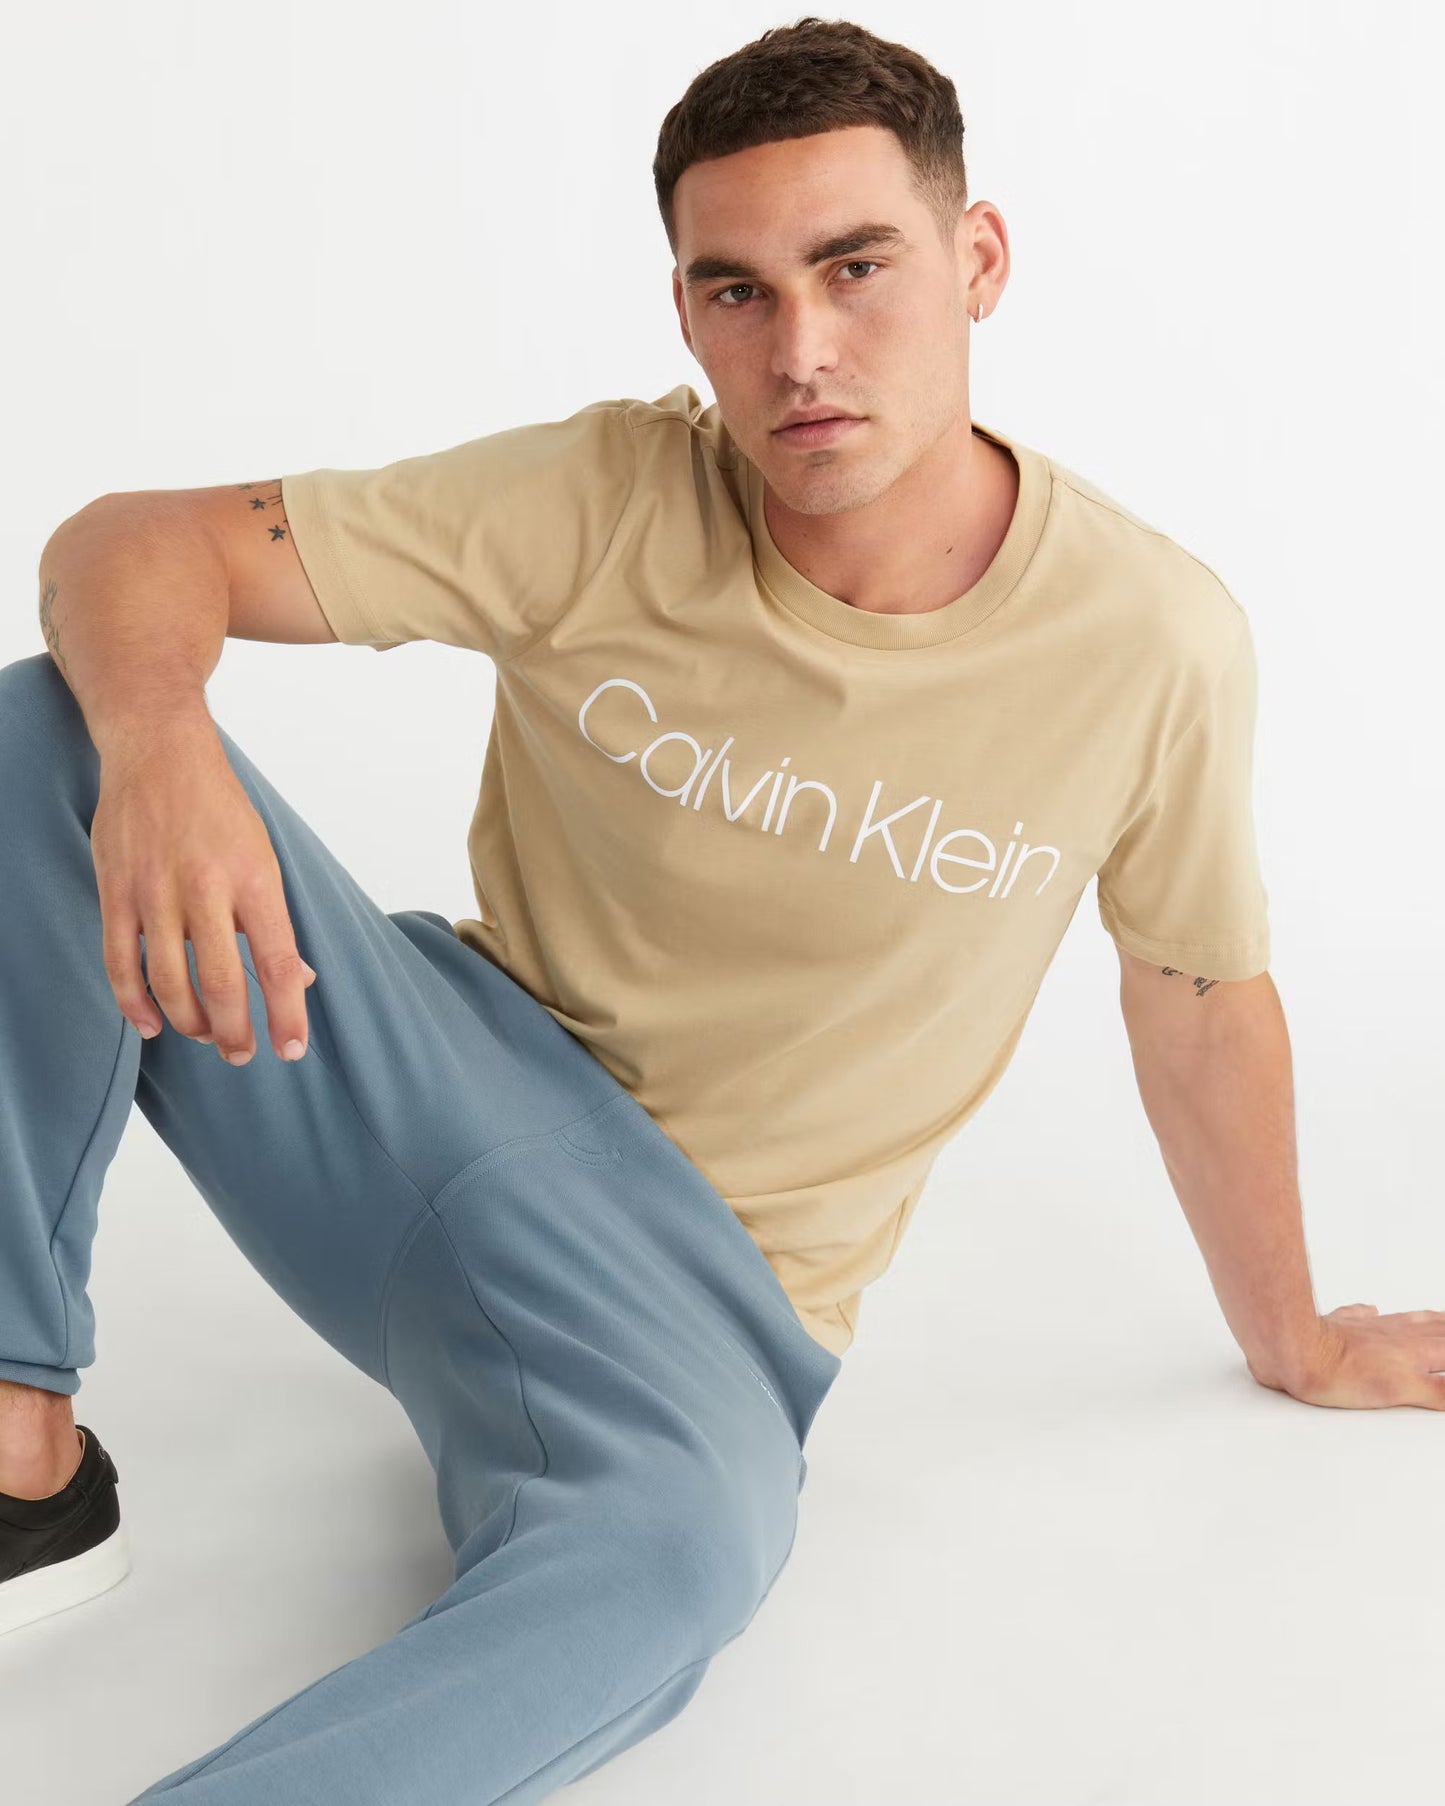 Calvin Klein Cotton Logo T-Shirt - K10K103078